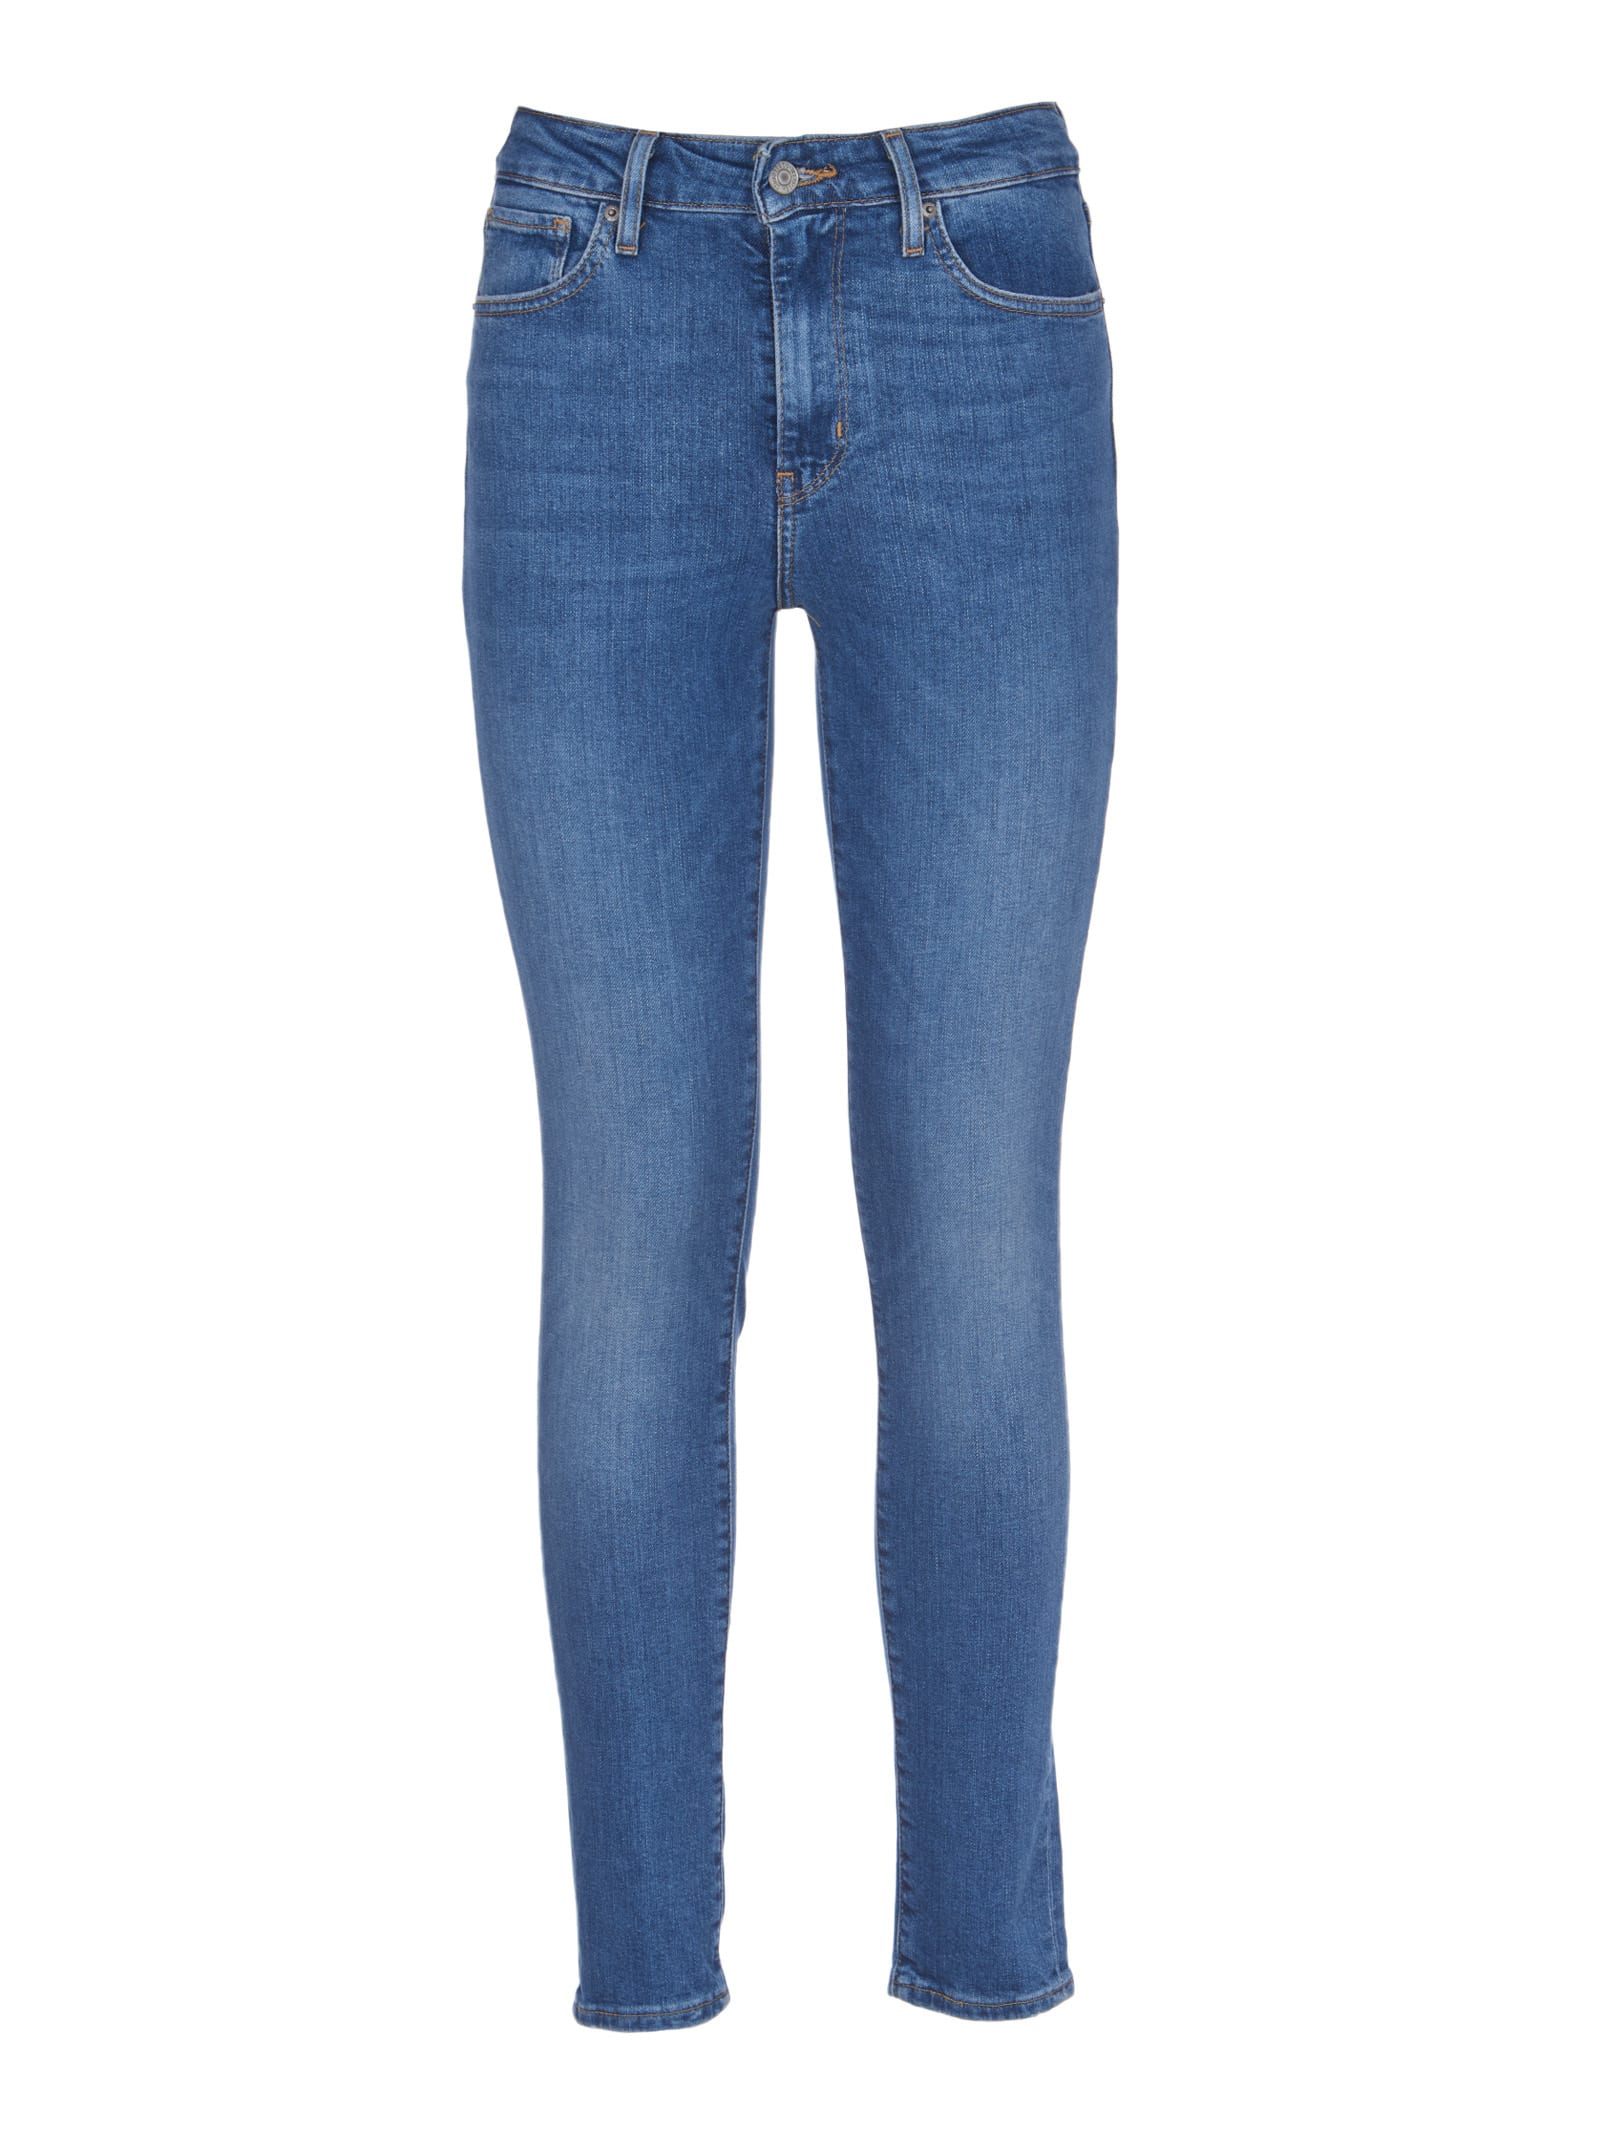 Levi's 721 High Rise Skinny Blue Jeans